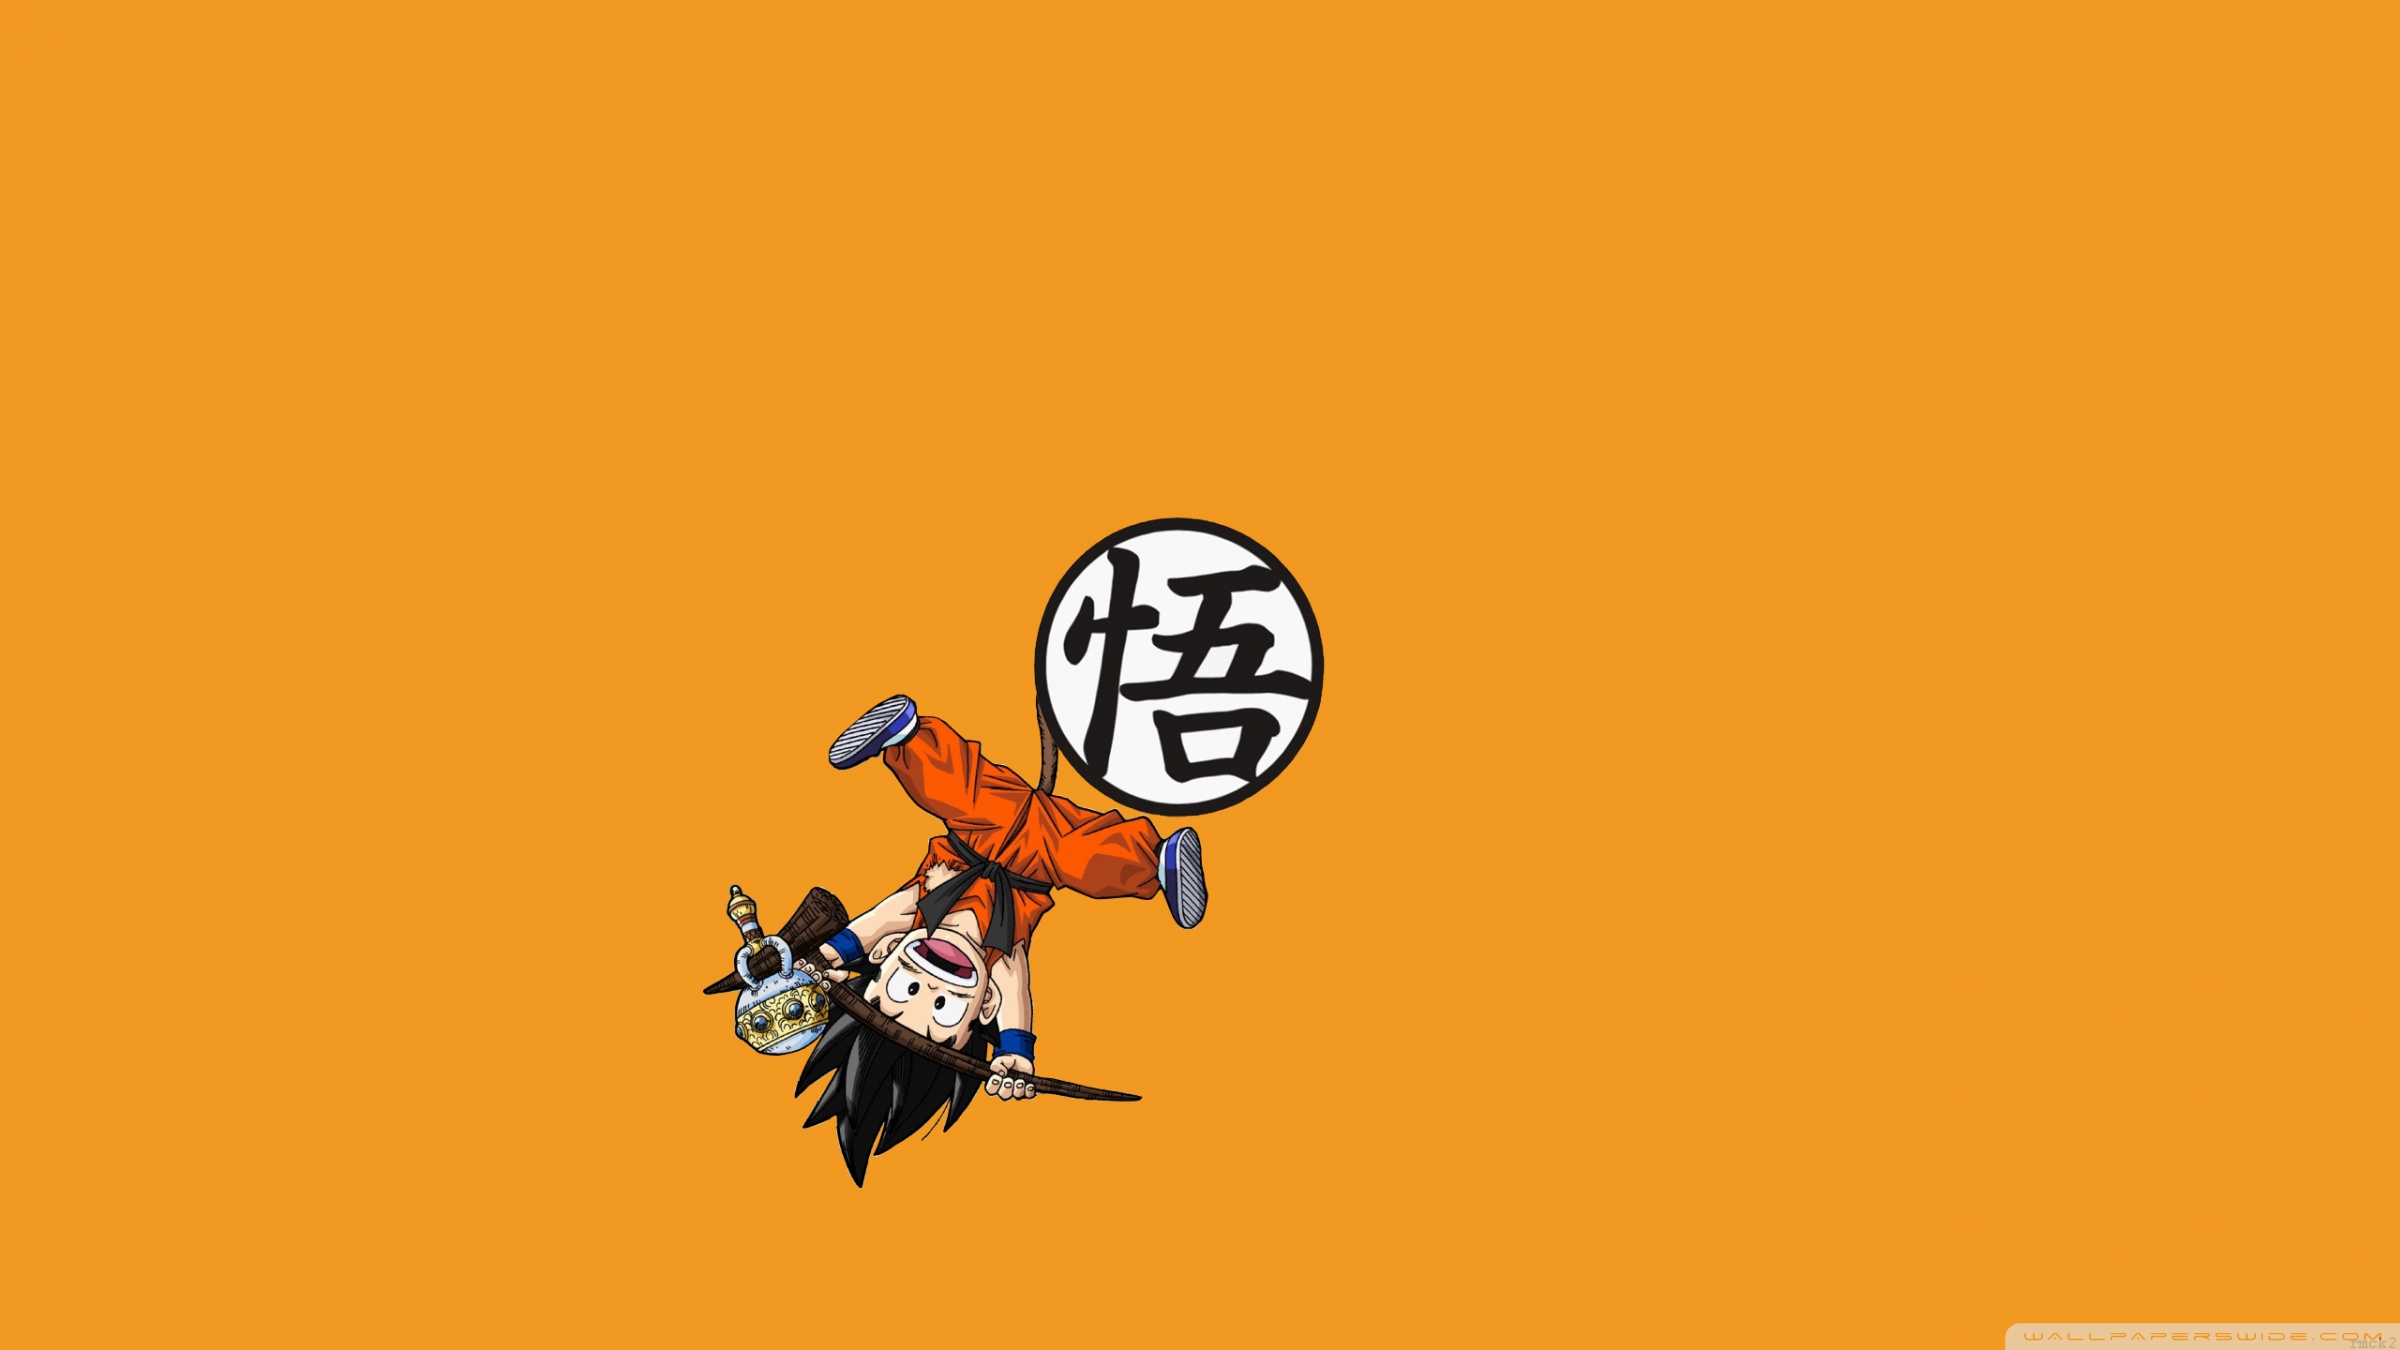 Download Dragon Ball 3d Anime Wallpaper